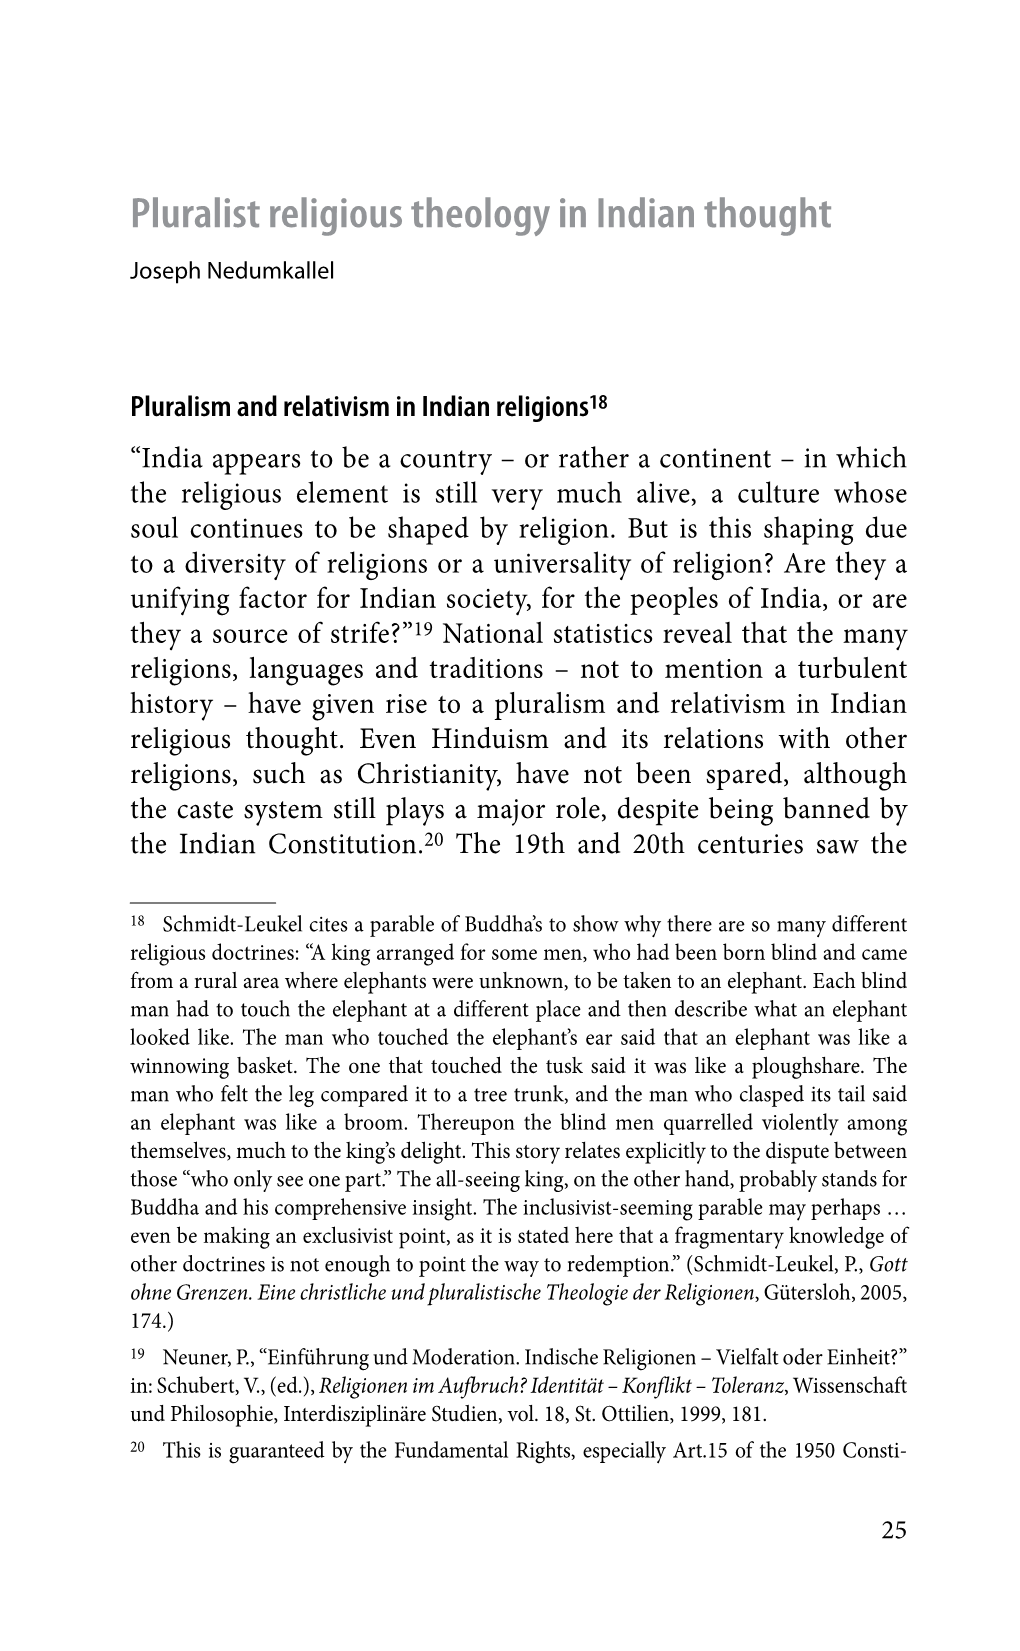 Pluralist Religious Theology in Indian Thought Joseph Nedumkallel